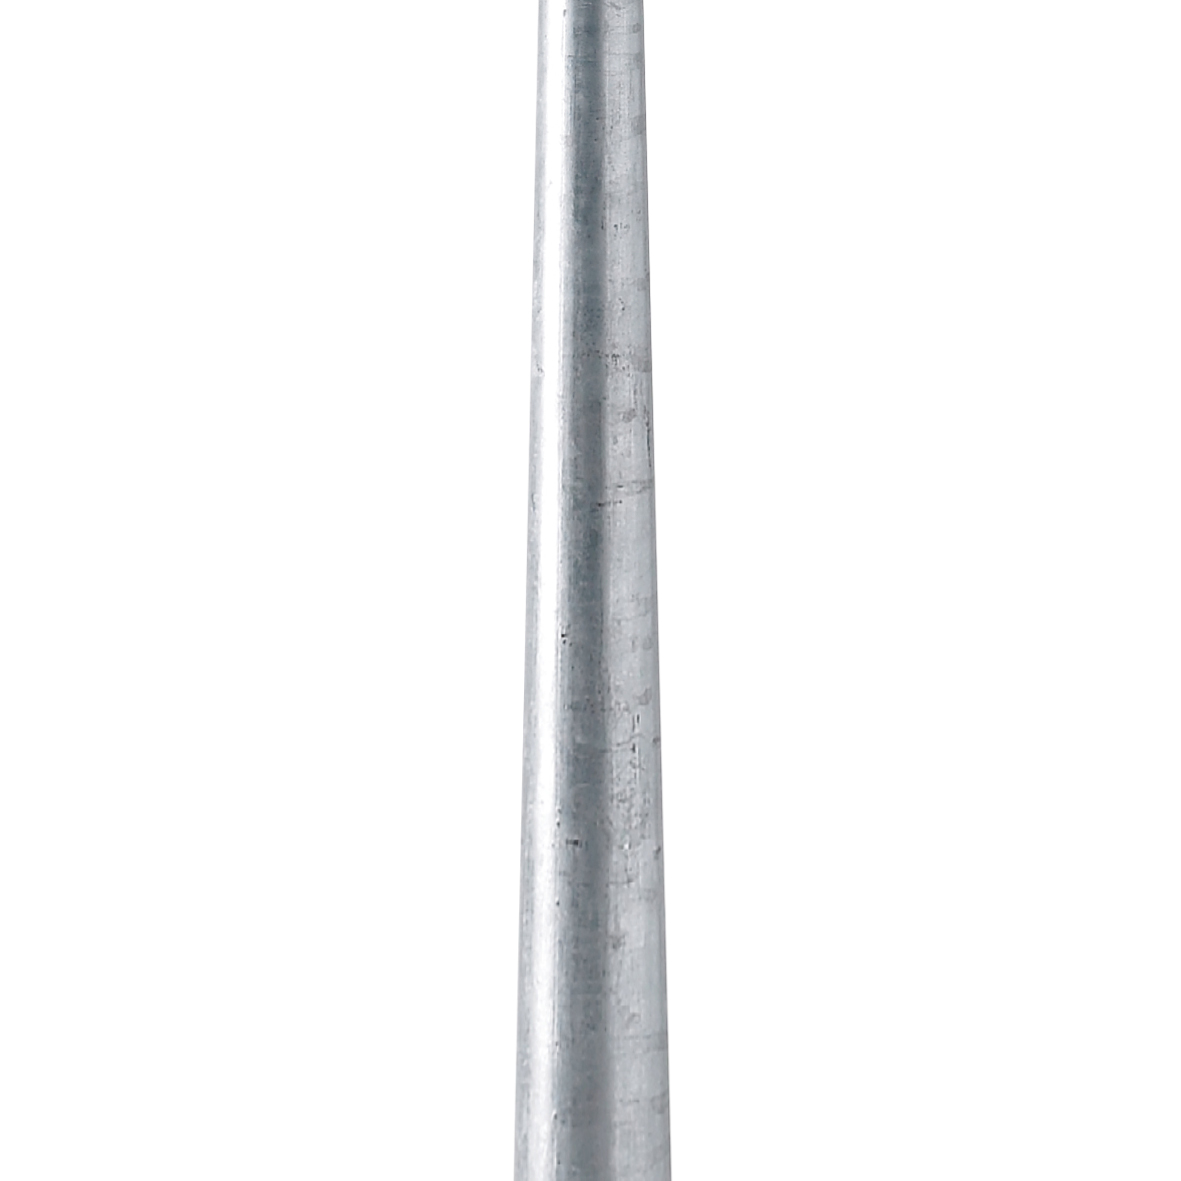 Wax Galvanized Pole conical 8m Steel